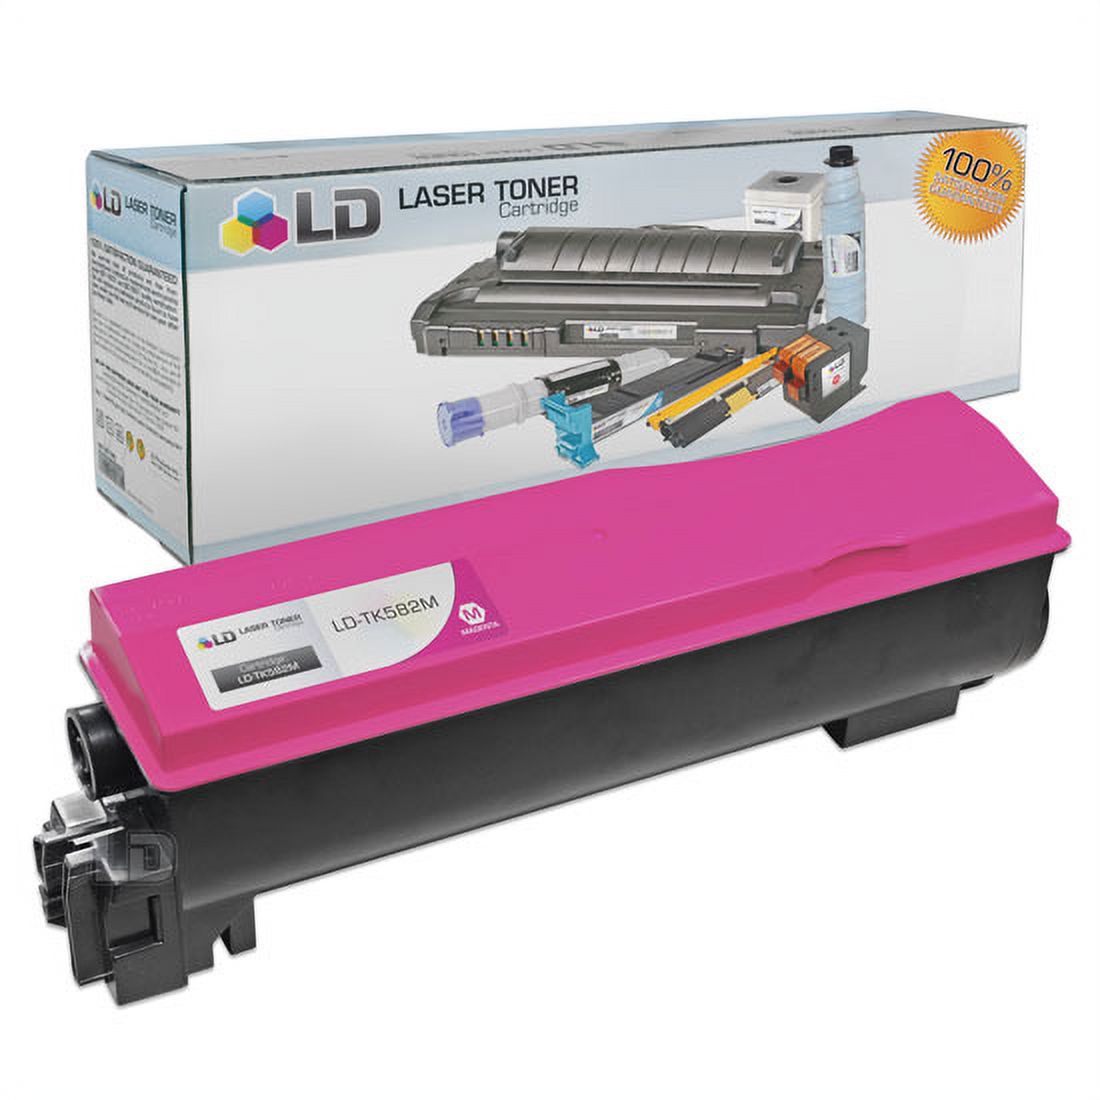 LD Compatible Kyocera-Mita Magenta TK-582M Laser Toner Cartridge for the FS-C5150DN - image 1 of 1